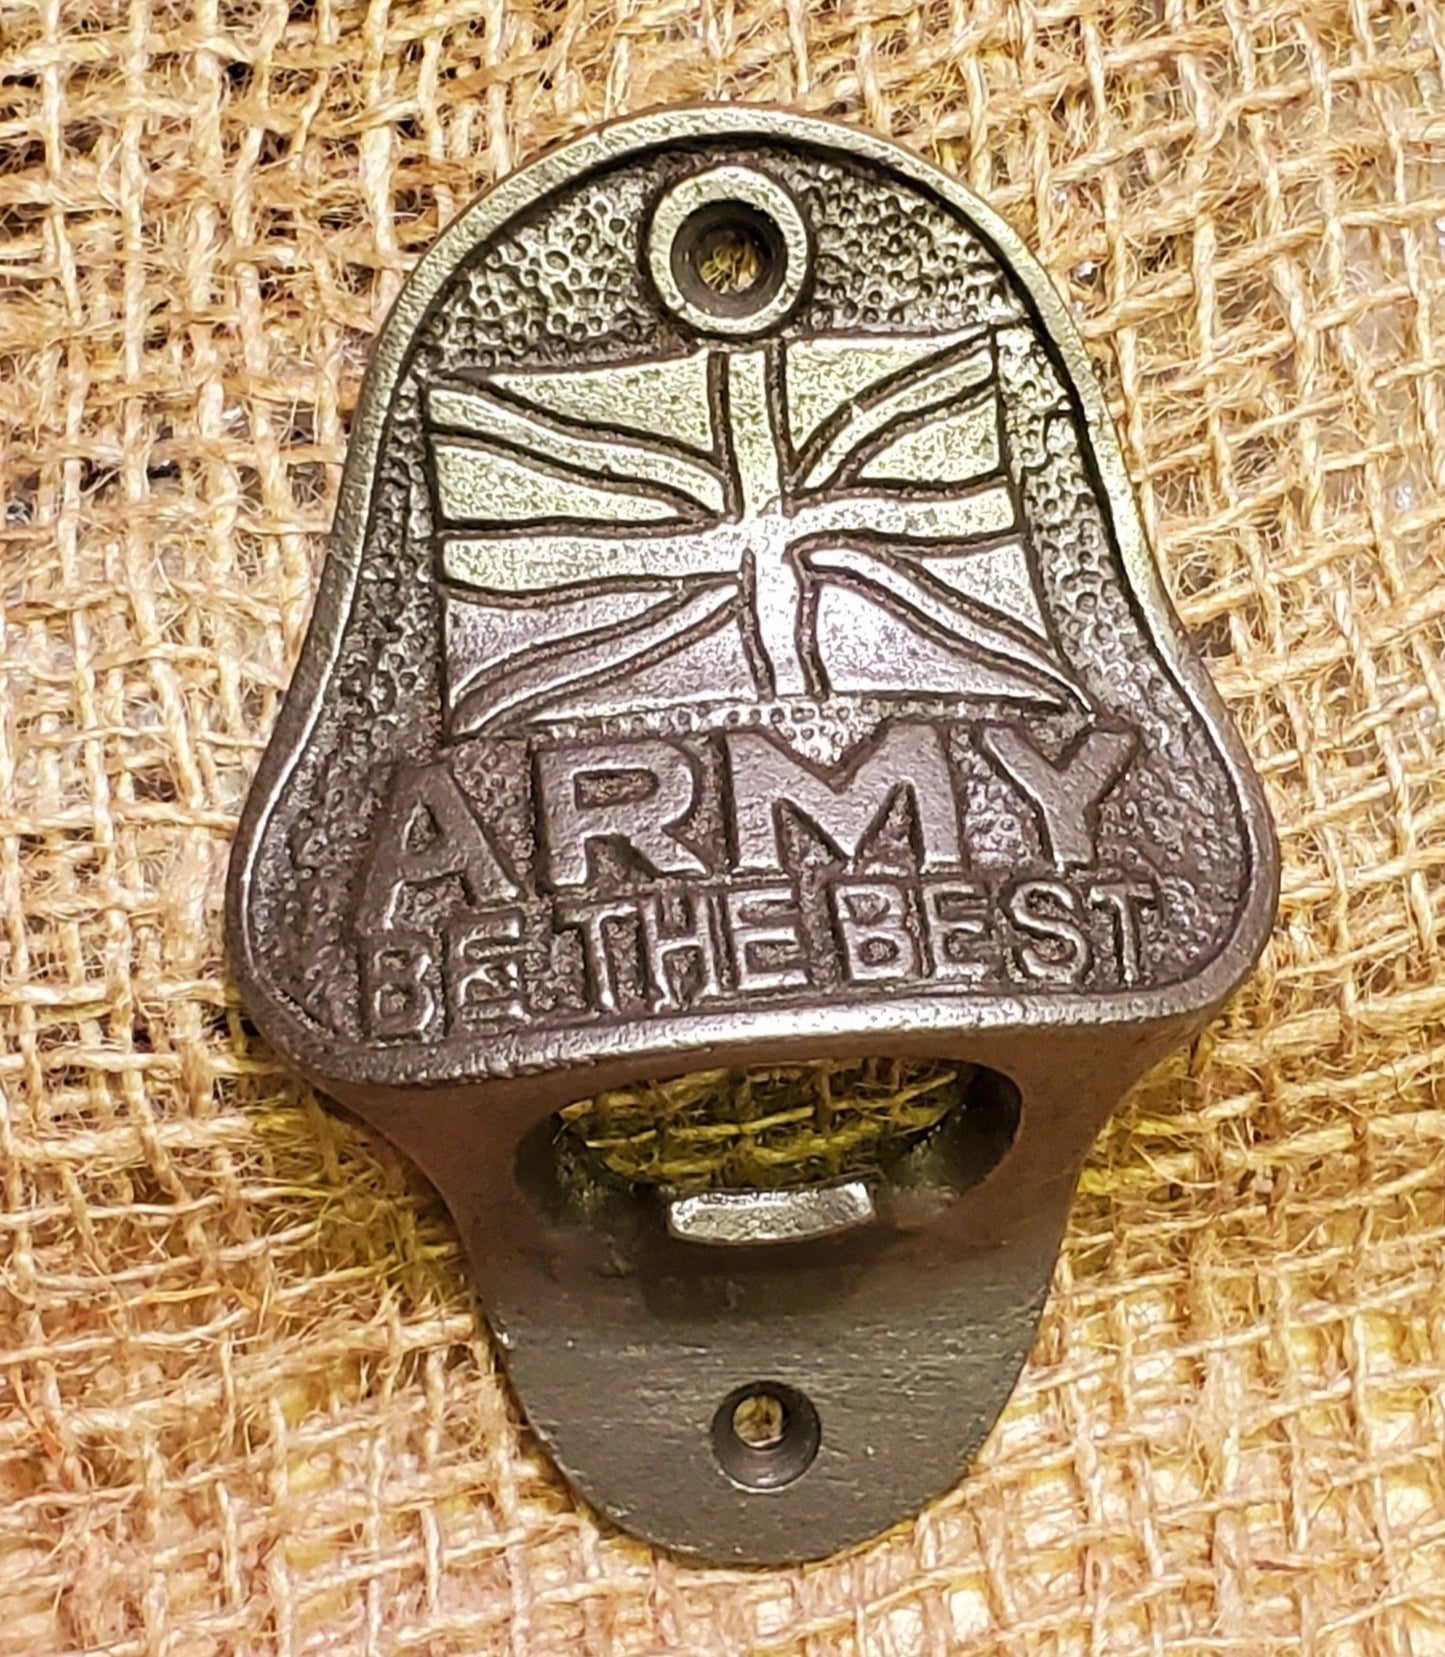 Army the best - Beer Bottle Opener - Spearhead Collection - Bottle Openers - Bottle Openers